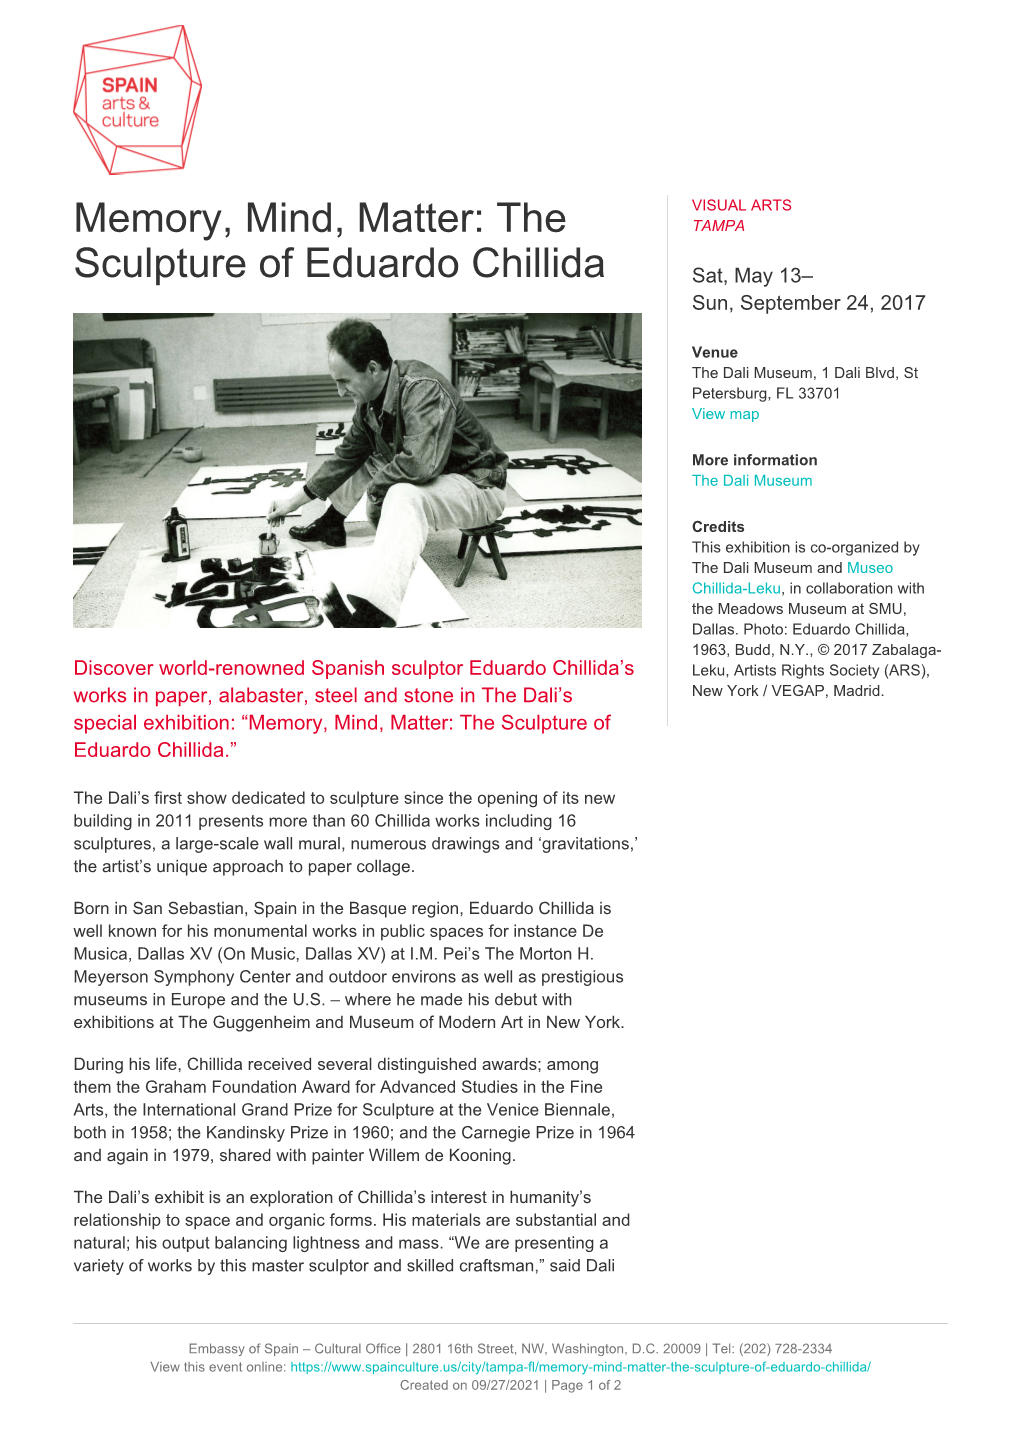 Memory, Mind, Matter: the Sculpture of Eduardo Chillida.”